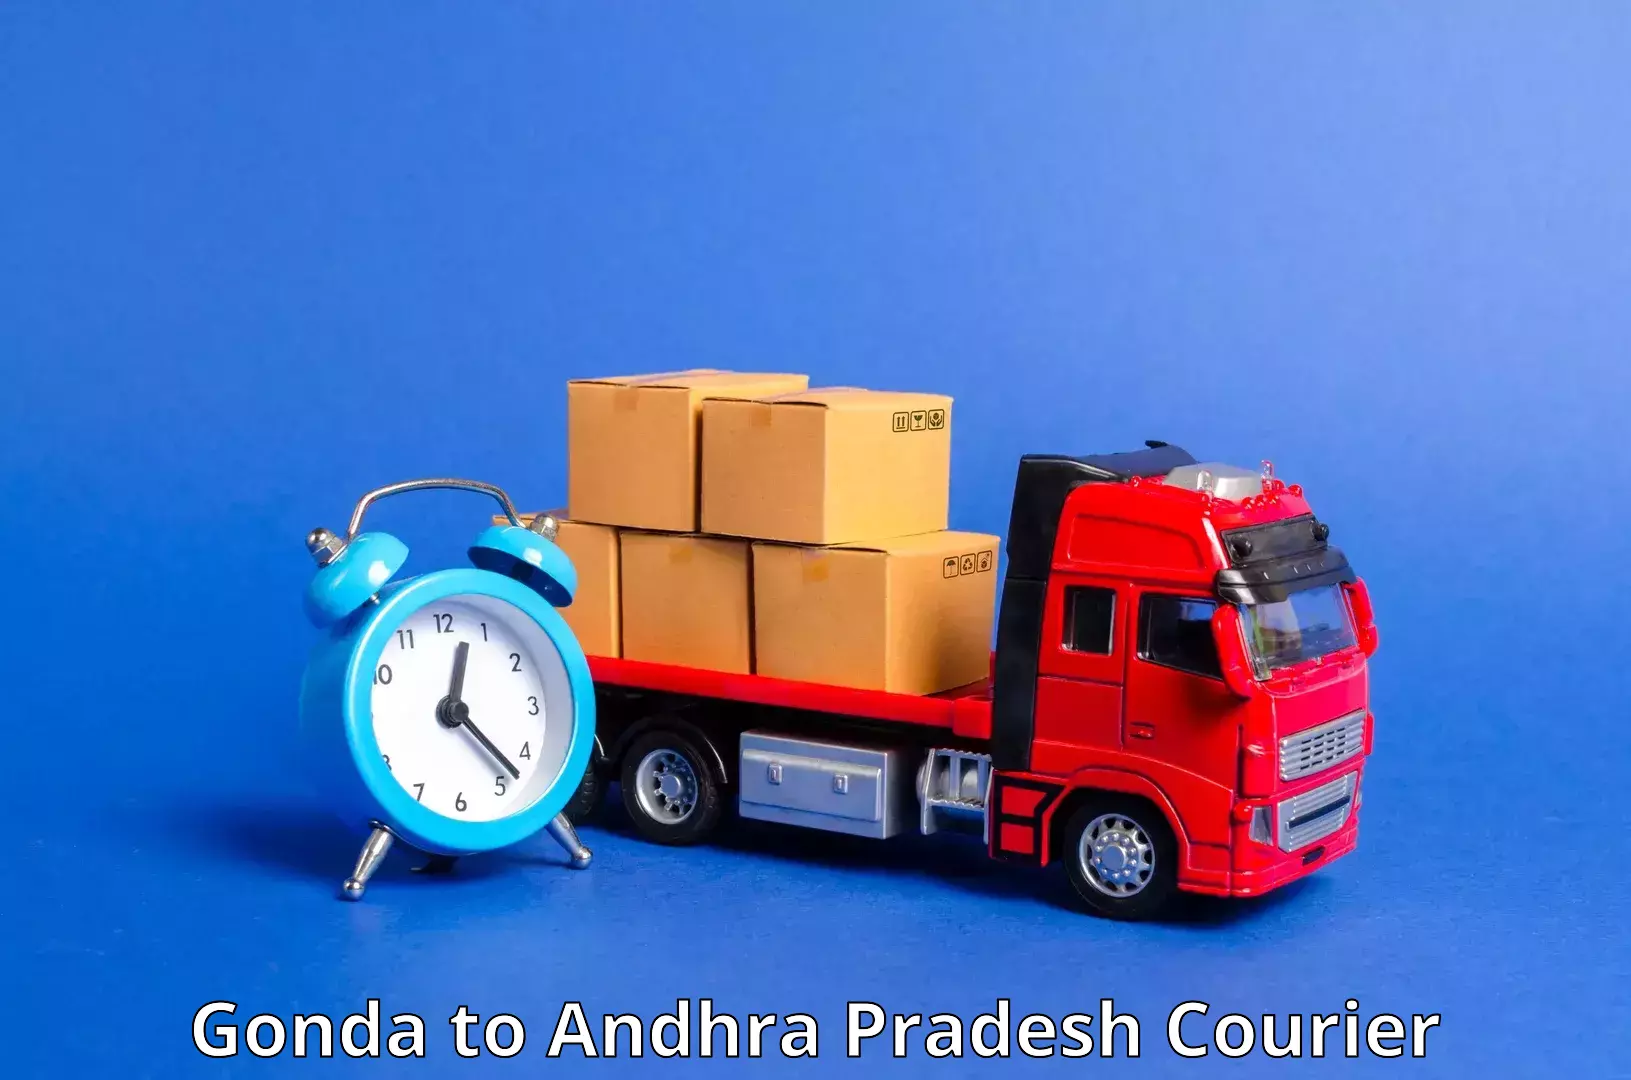 Global delivery options Gonda to Tripuranthakam